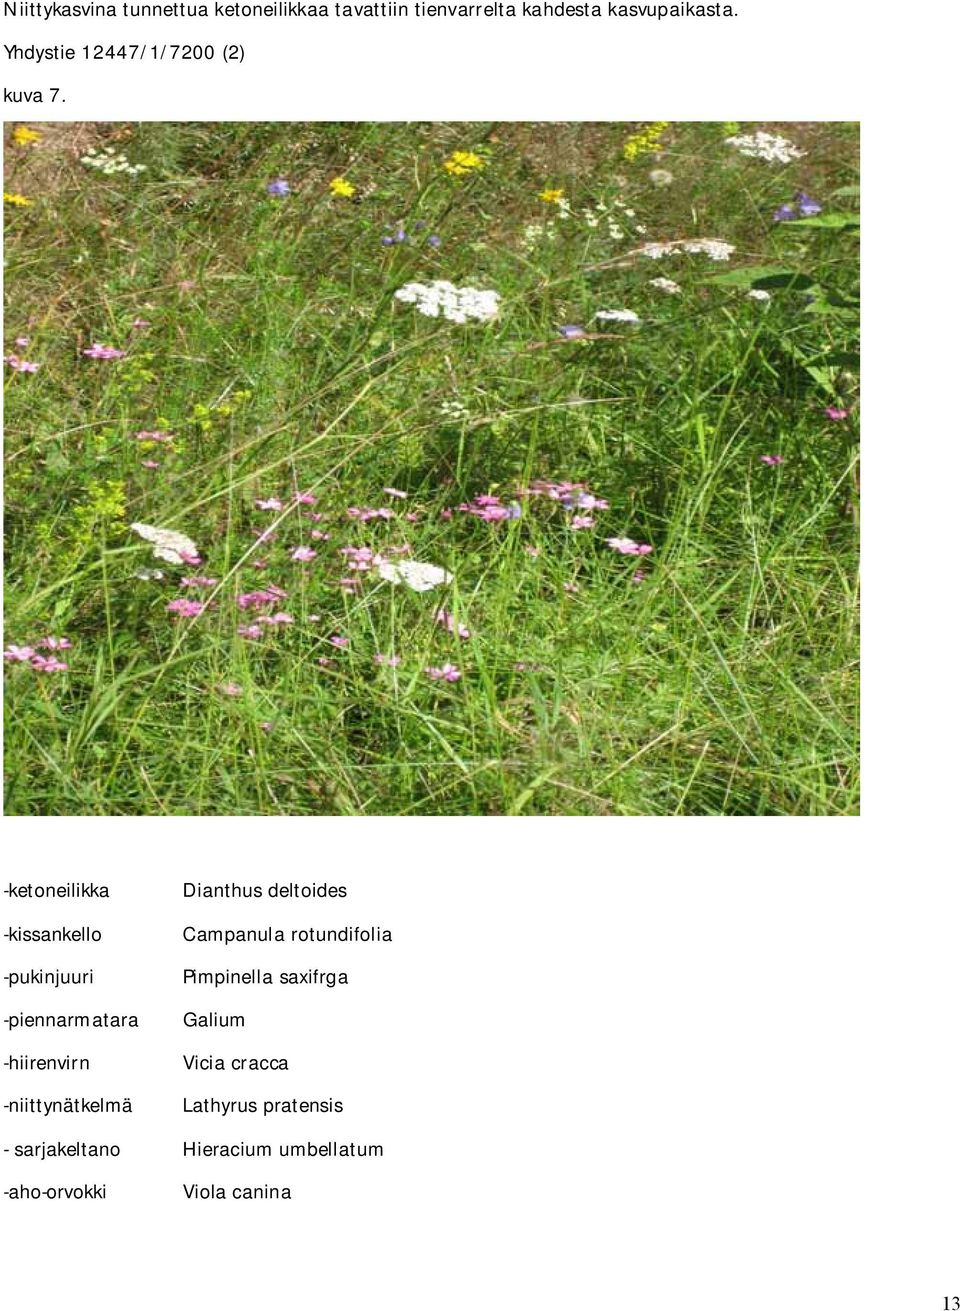 -ketoneilikka Dianthus deltoides -kissankello Campanula rotundifolia -pukinjuuri Pimpinella